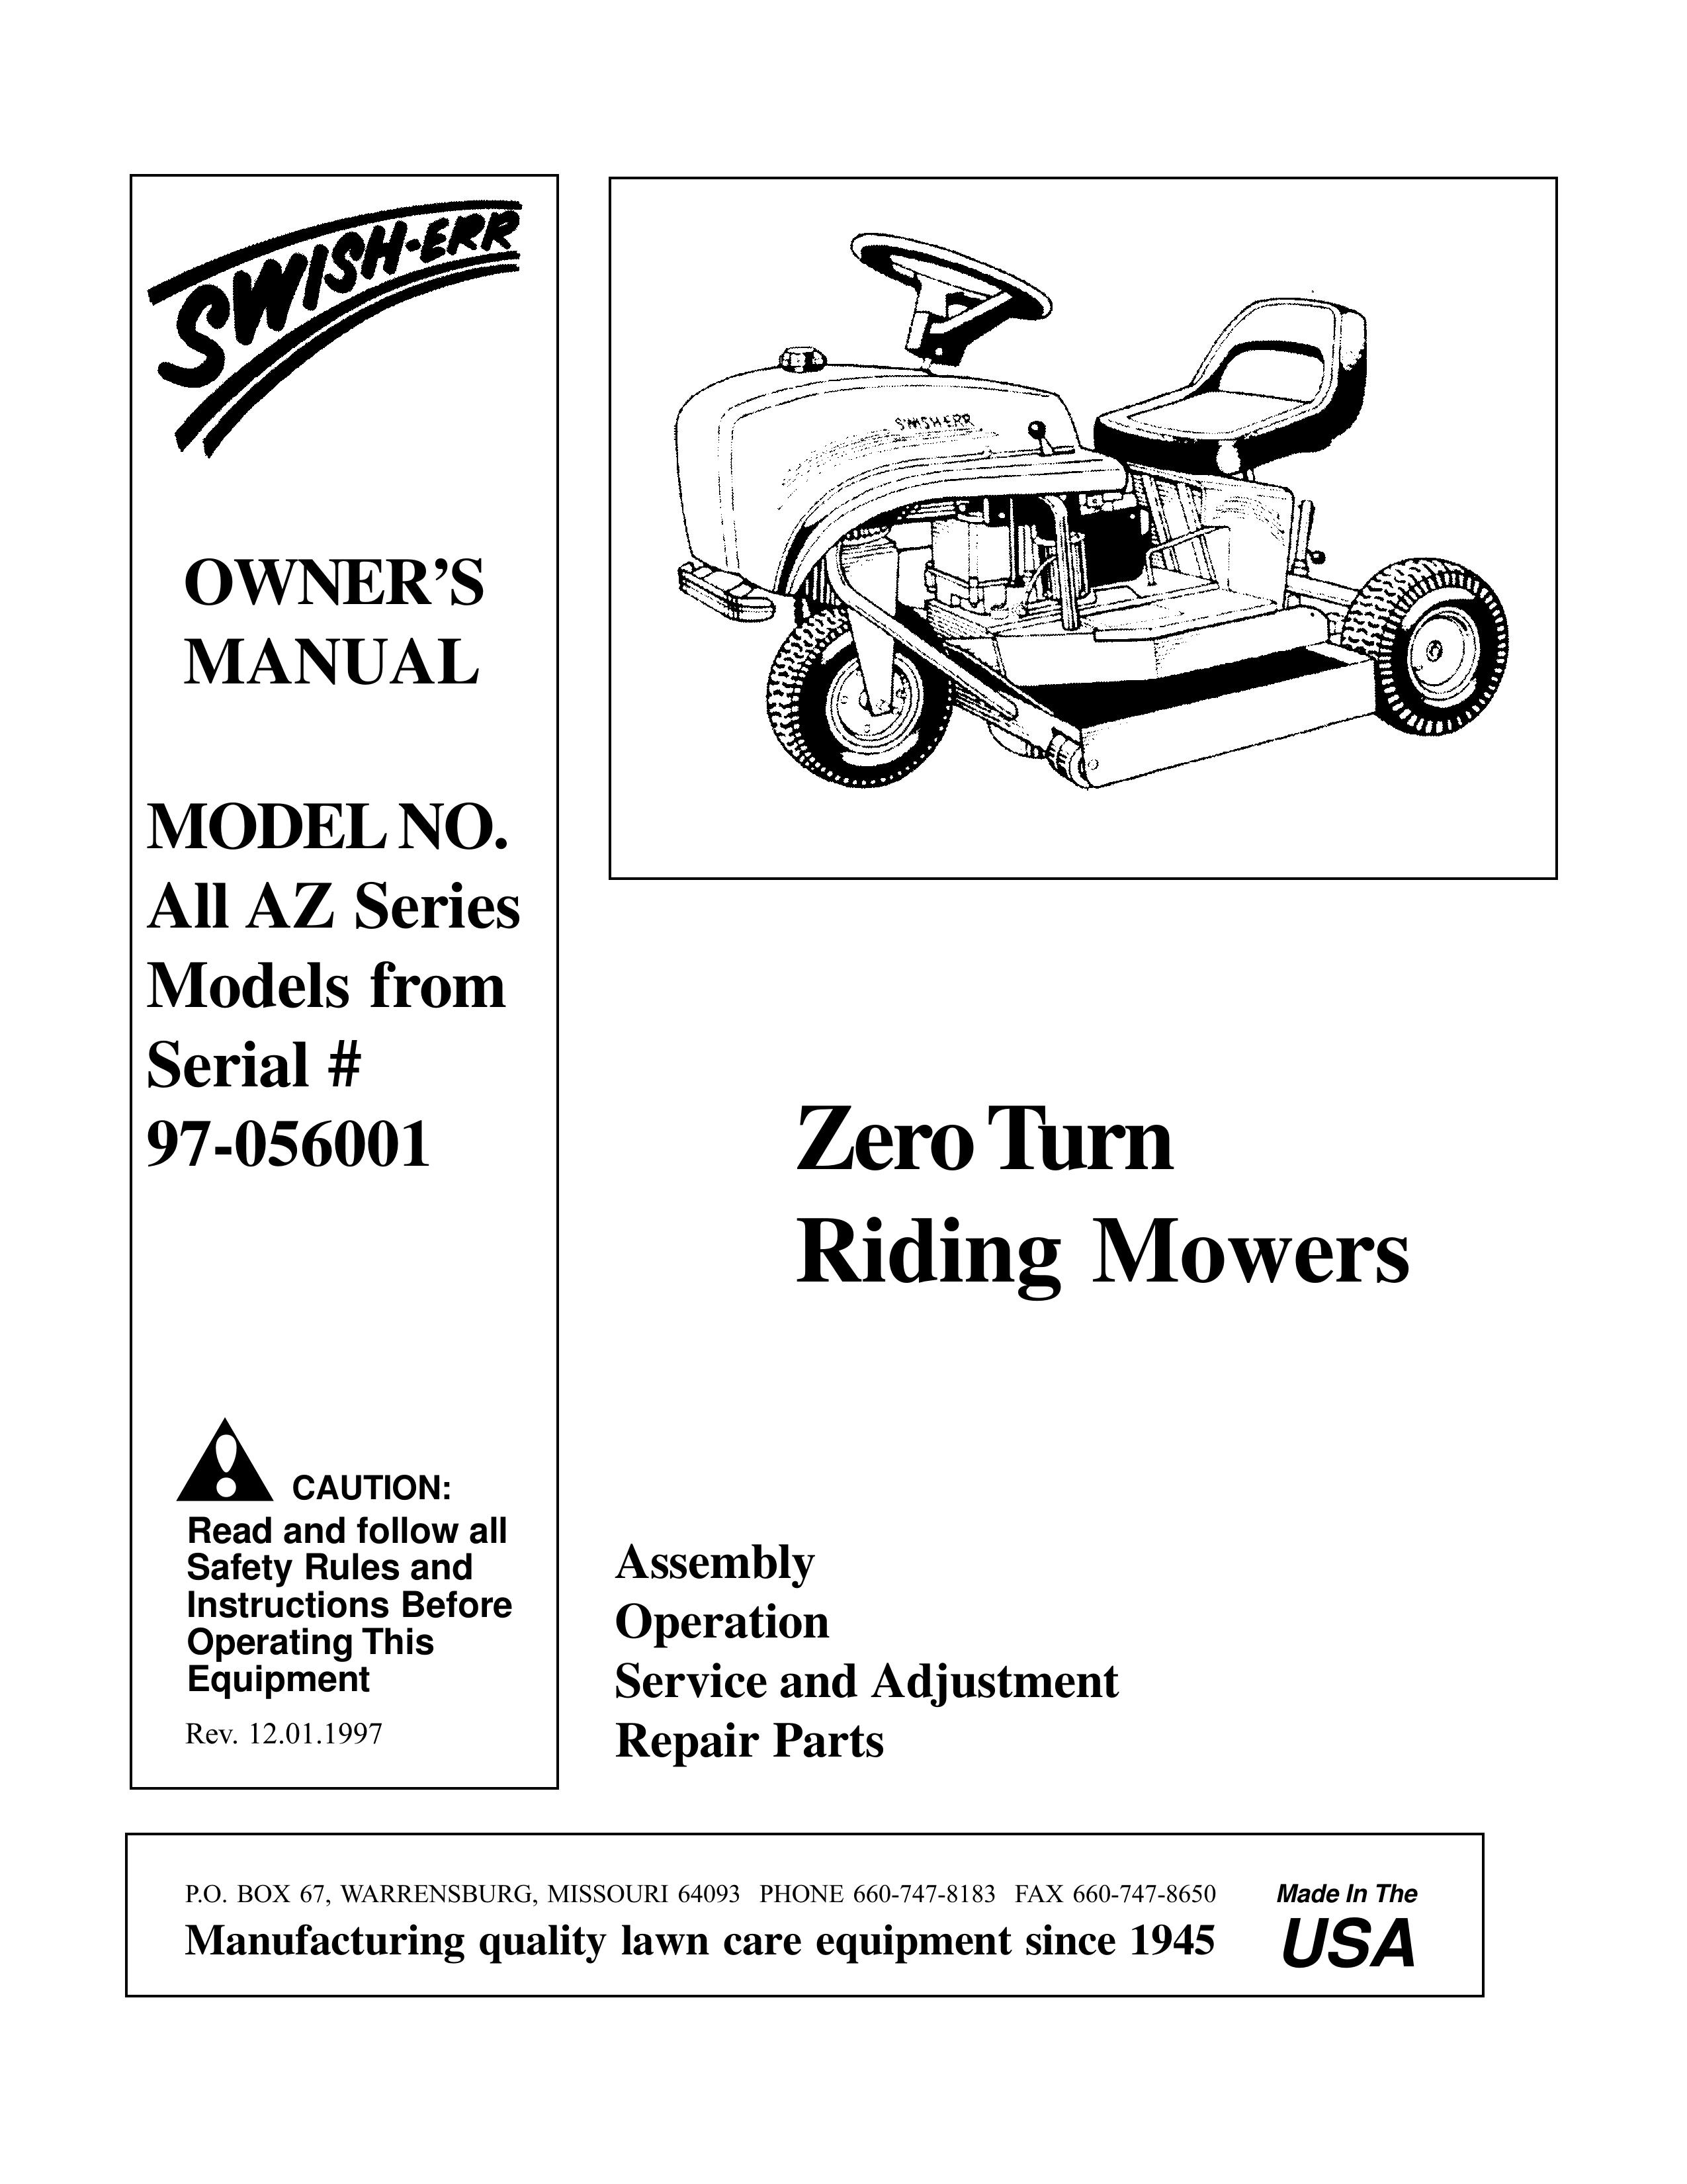 Swisher AZ Series Lawn Mower User Manual